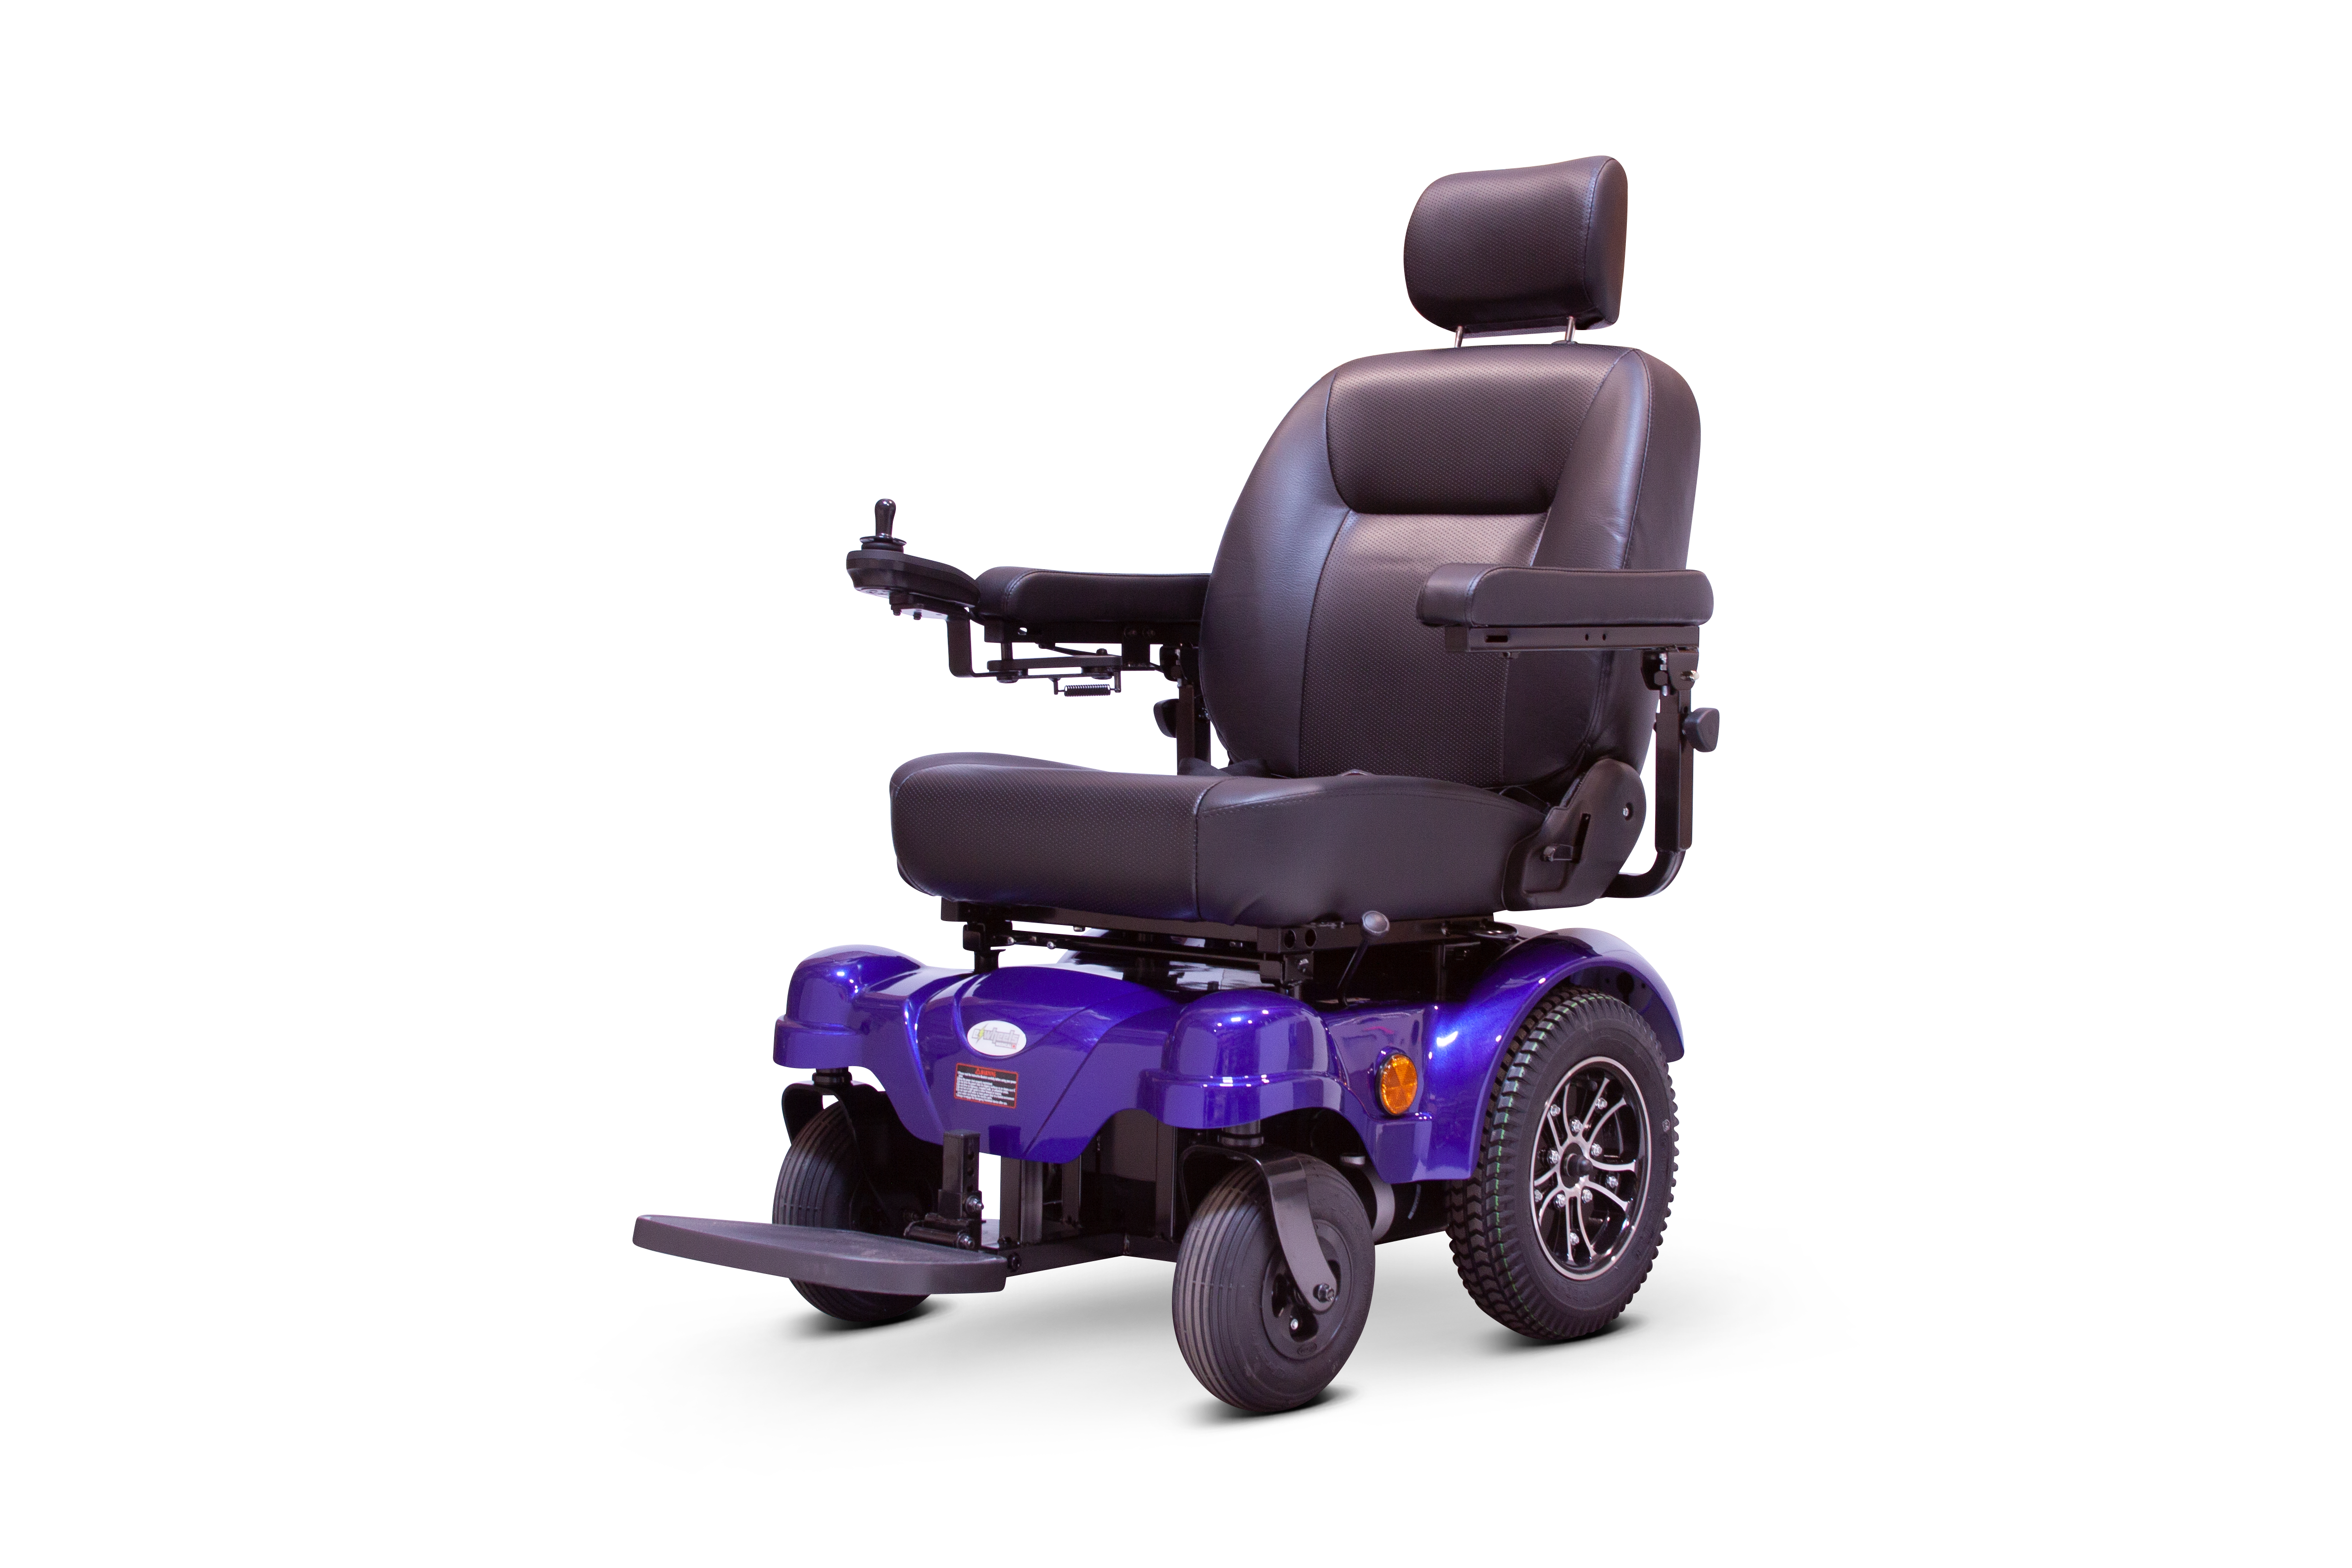 BLUE power wheelchair EW-M51 Medical Electric Power Wheelchair By E-Wheels Medical - PureUps